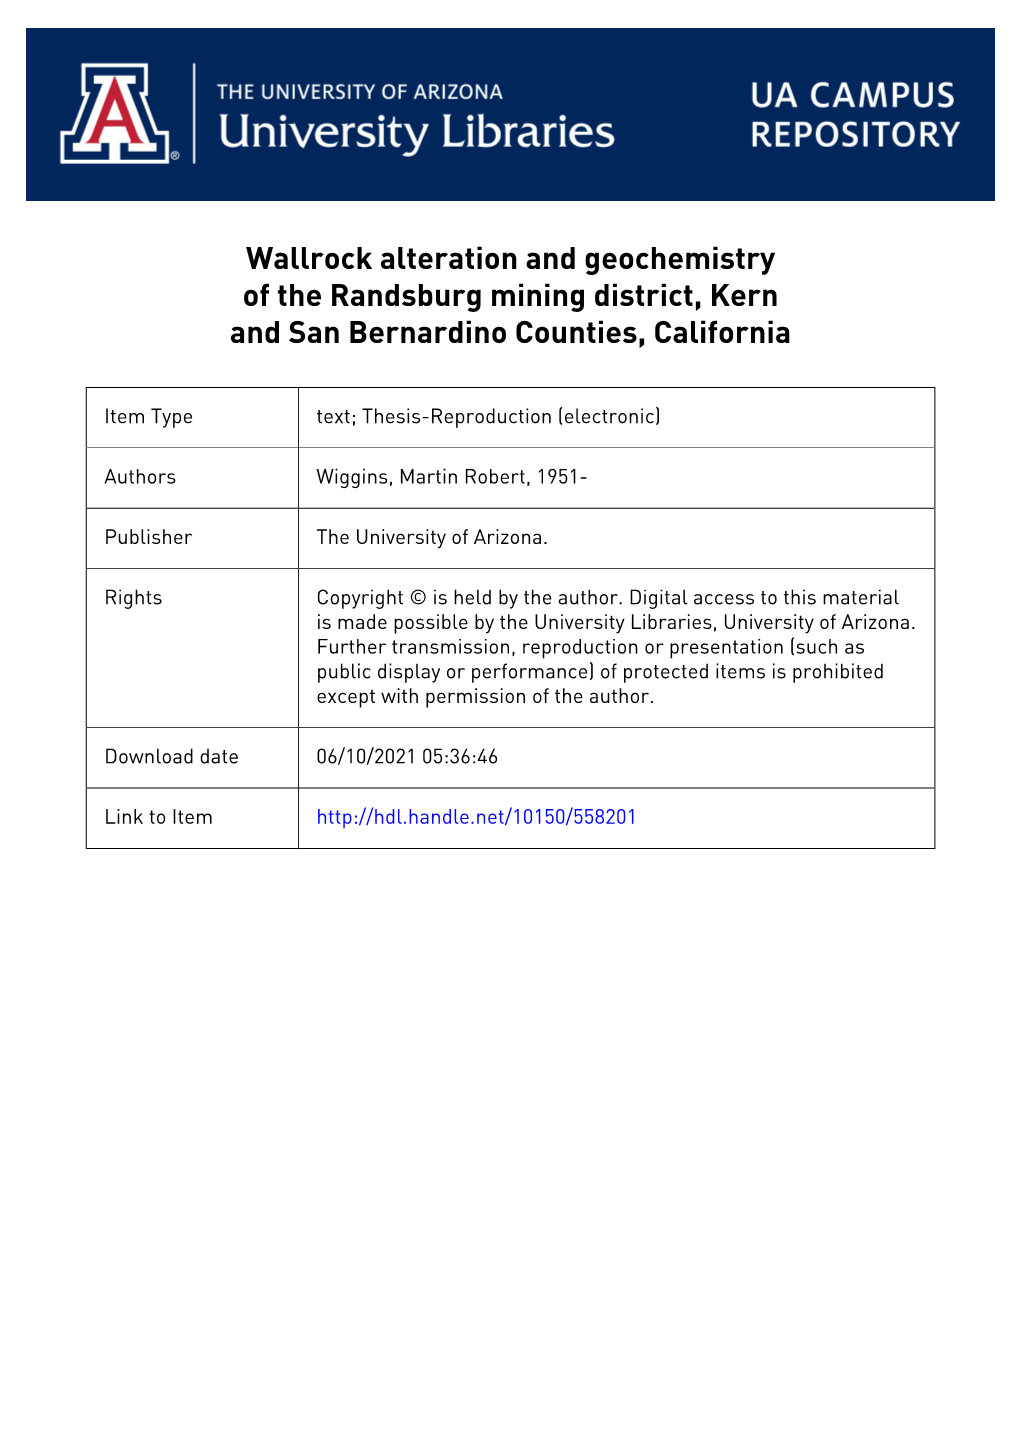 Wallrock Alteration and Geochemistry of the Randsburg Mining District, Kern and San Bernardino Counties, California